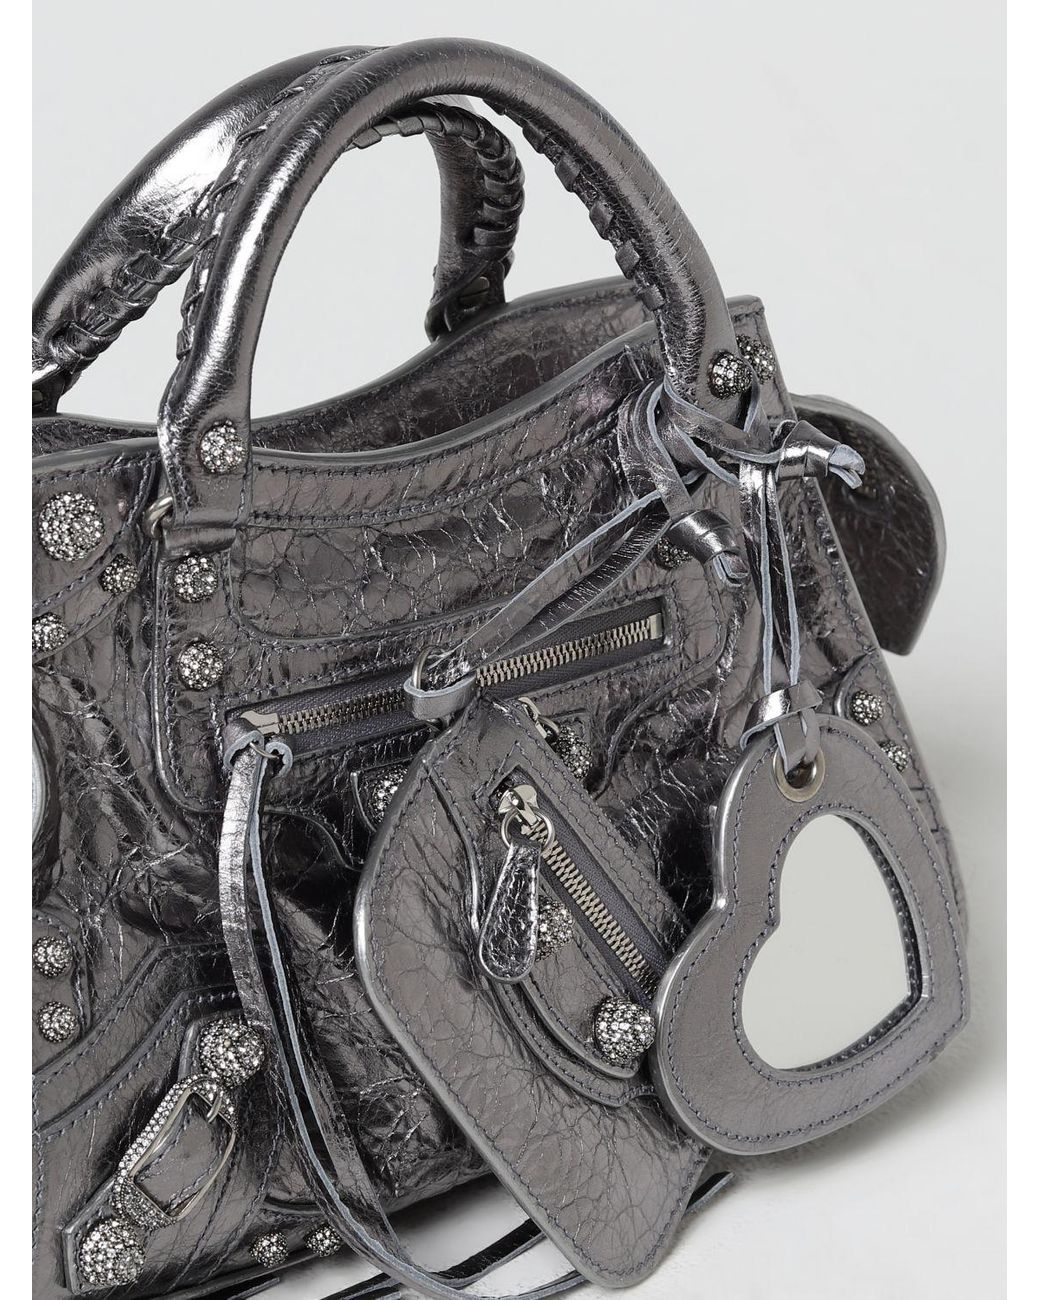 Metallic Silver Snakeskin Leather Small Satchel Top Handle Bag